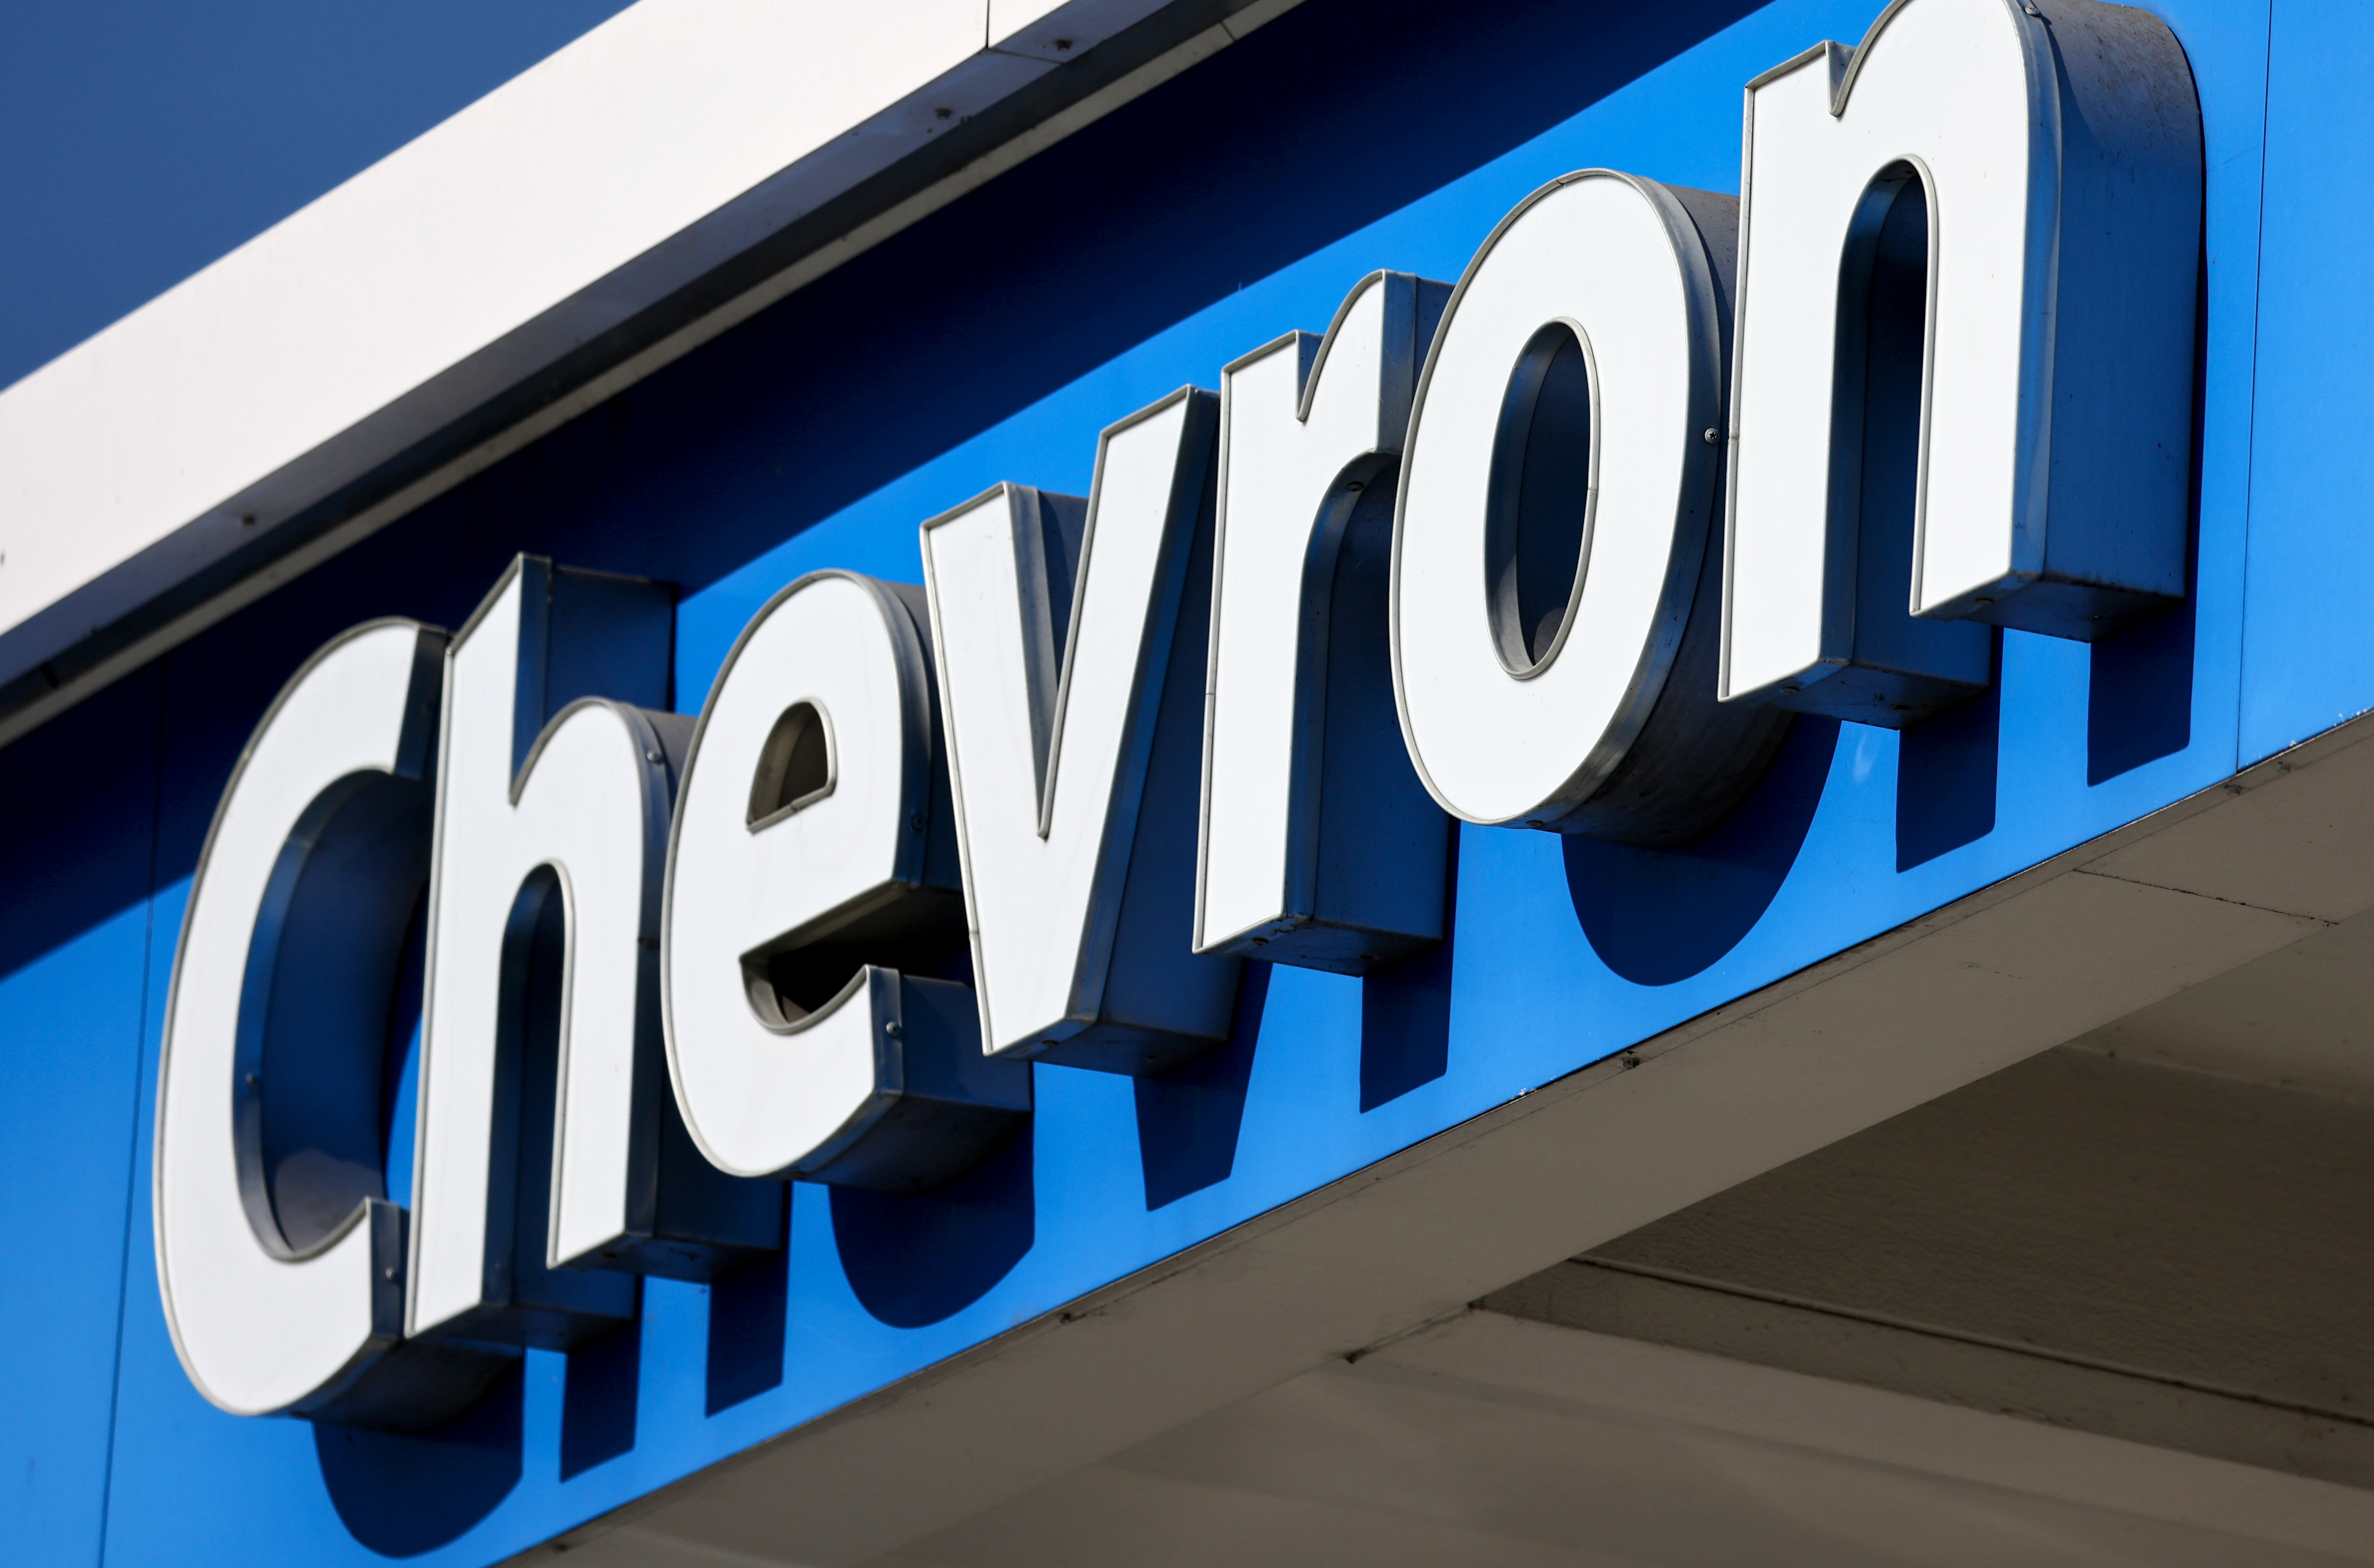 Biden Admin Authorizes Chevron to Resume Oil Pumping in Venezuela